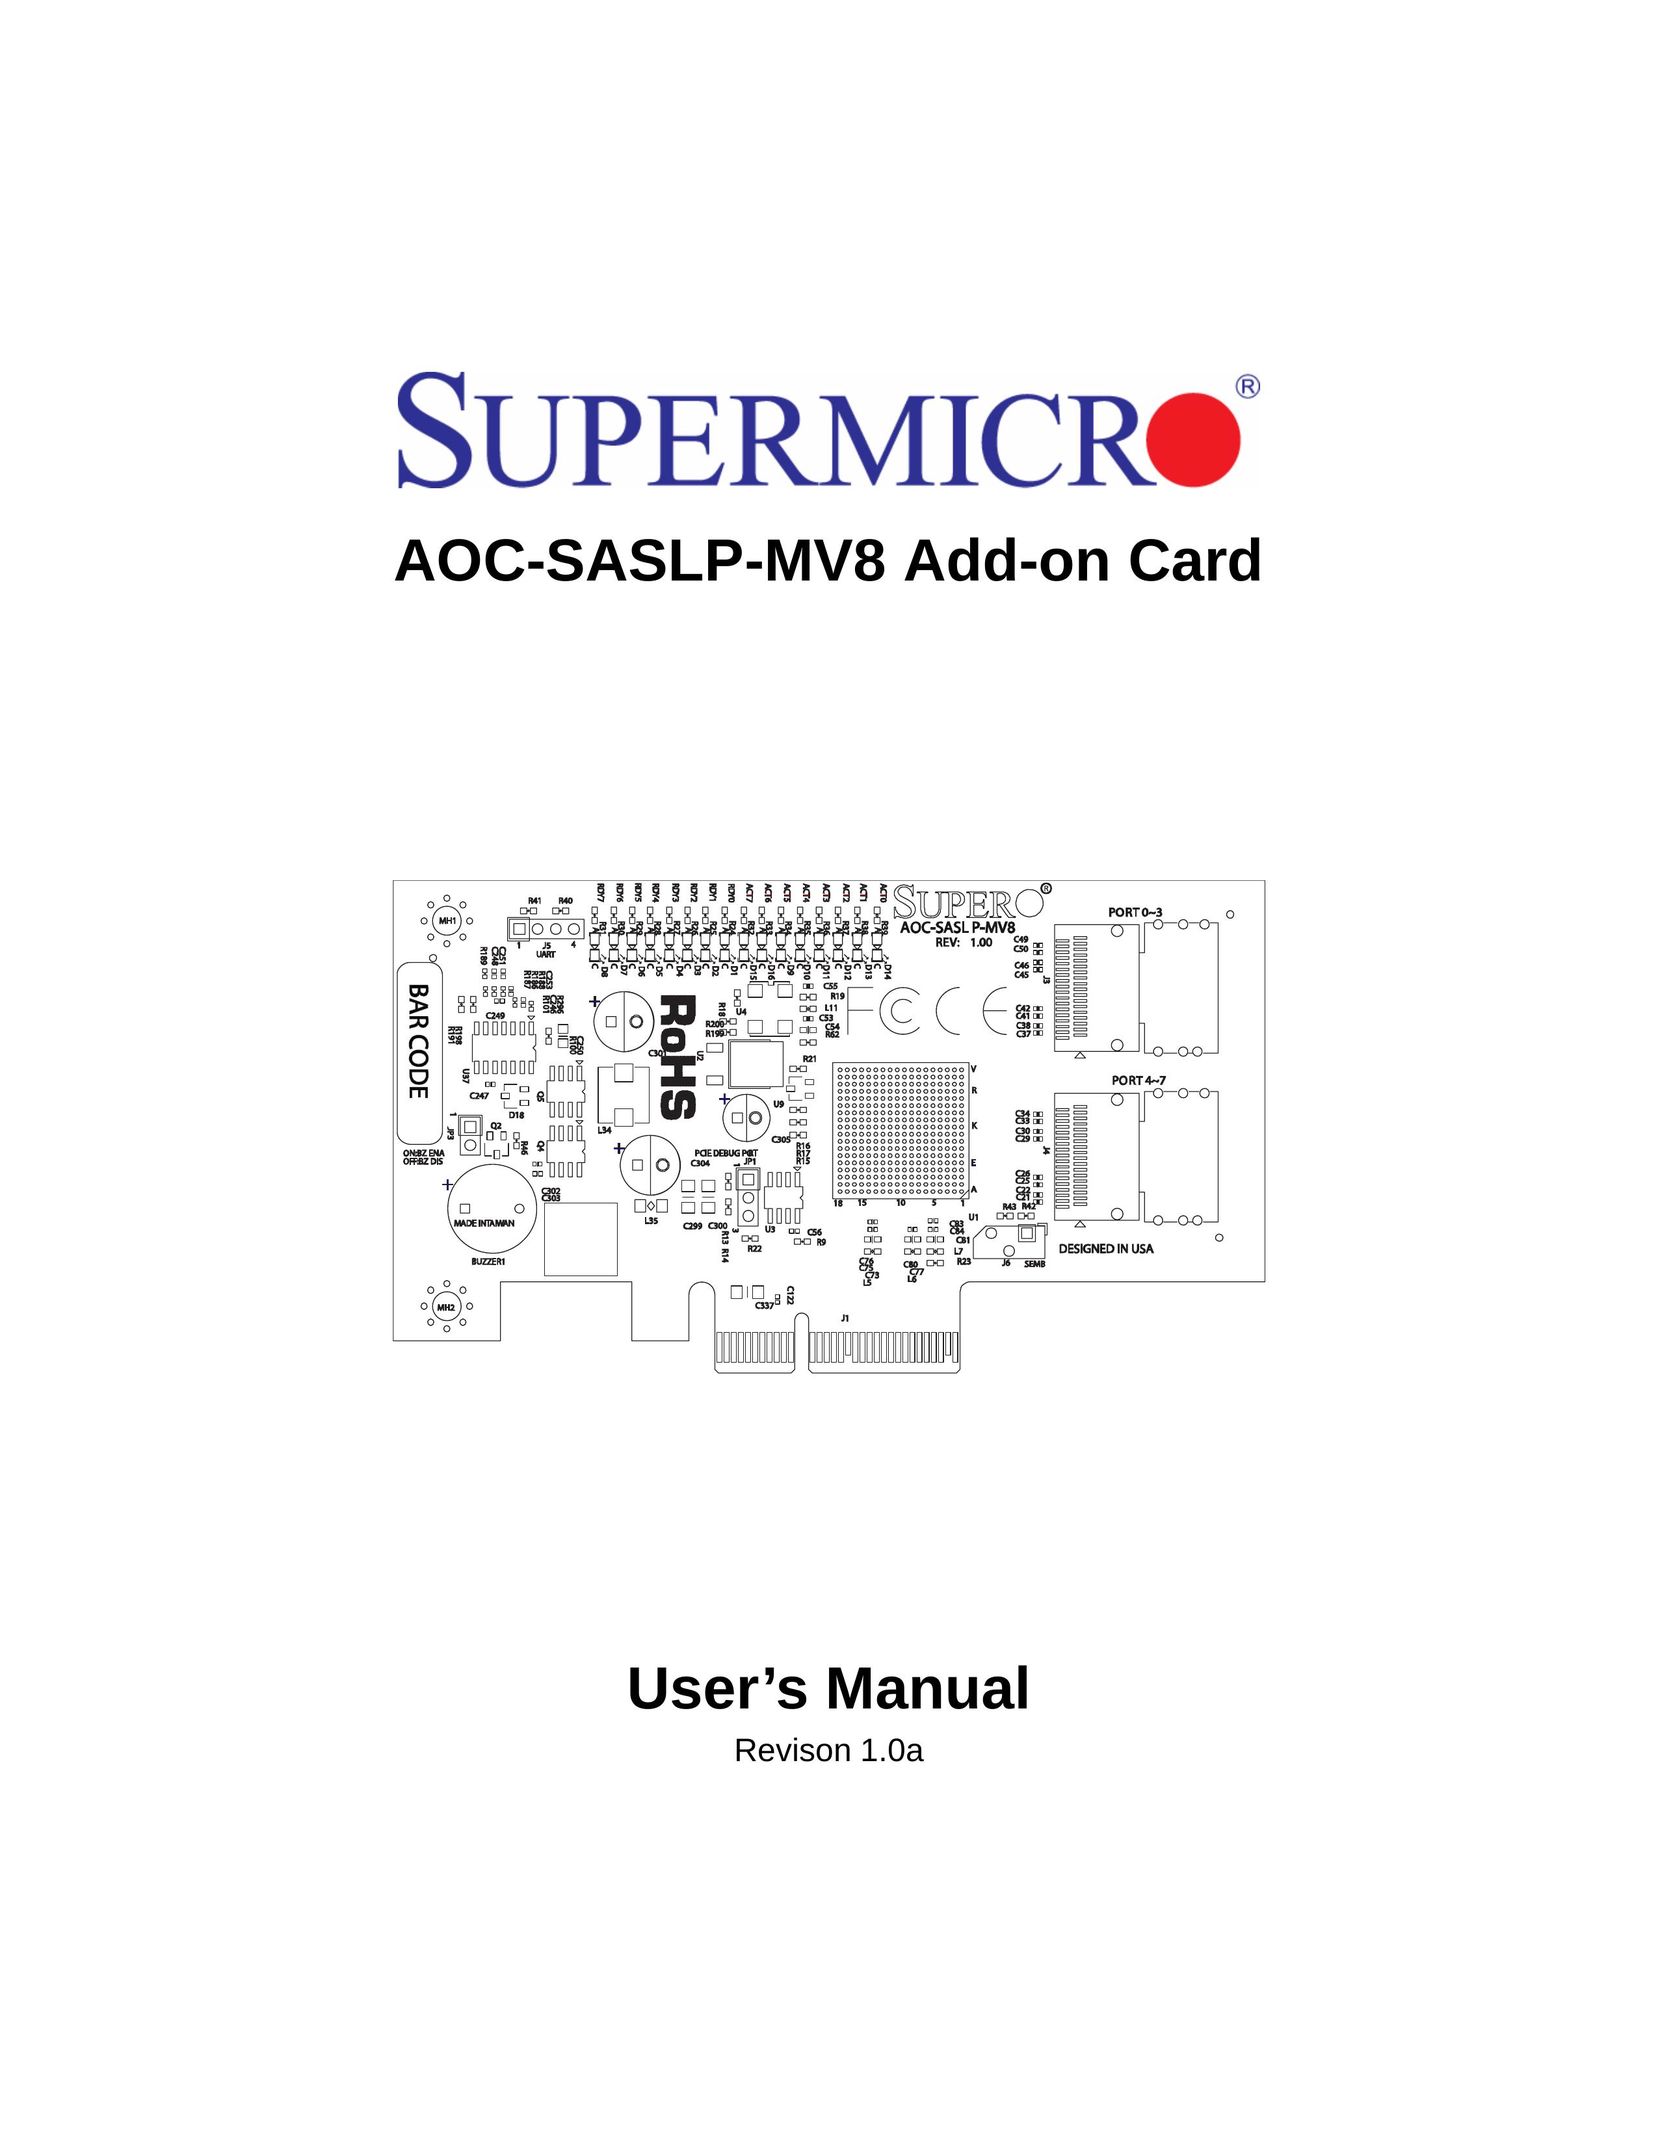 SUPER MICRO Computer AOC-SASLP-MV8 Computer Hardware User Manual